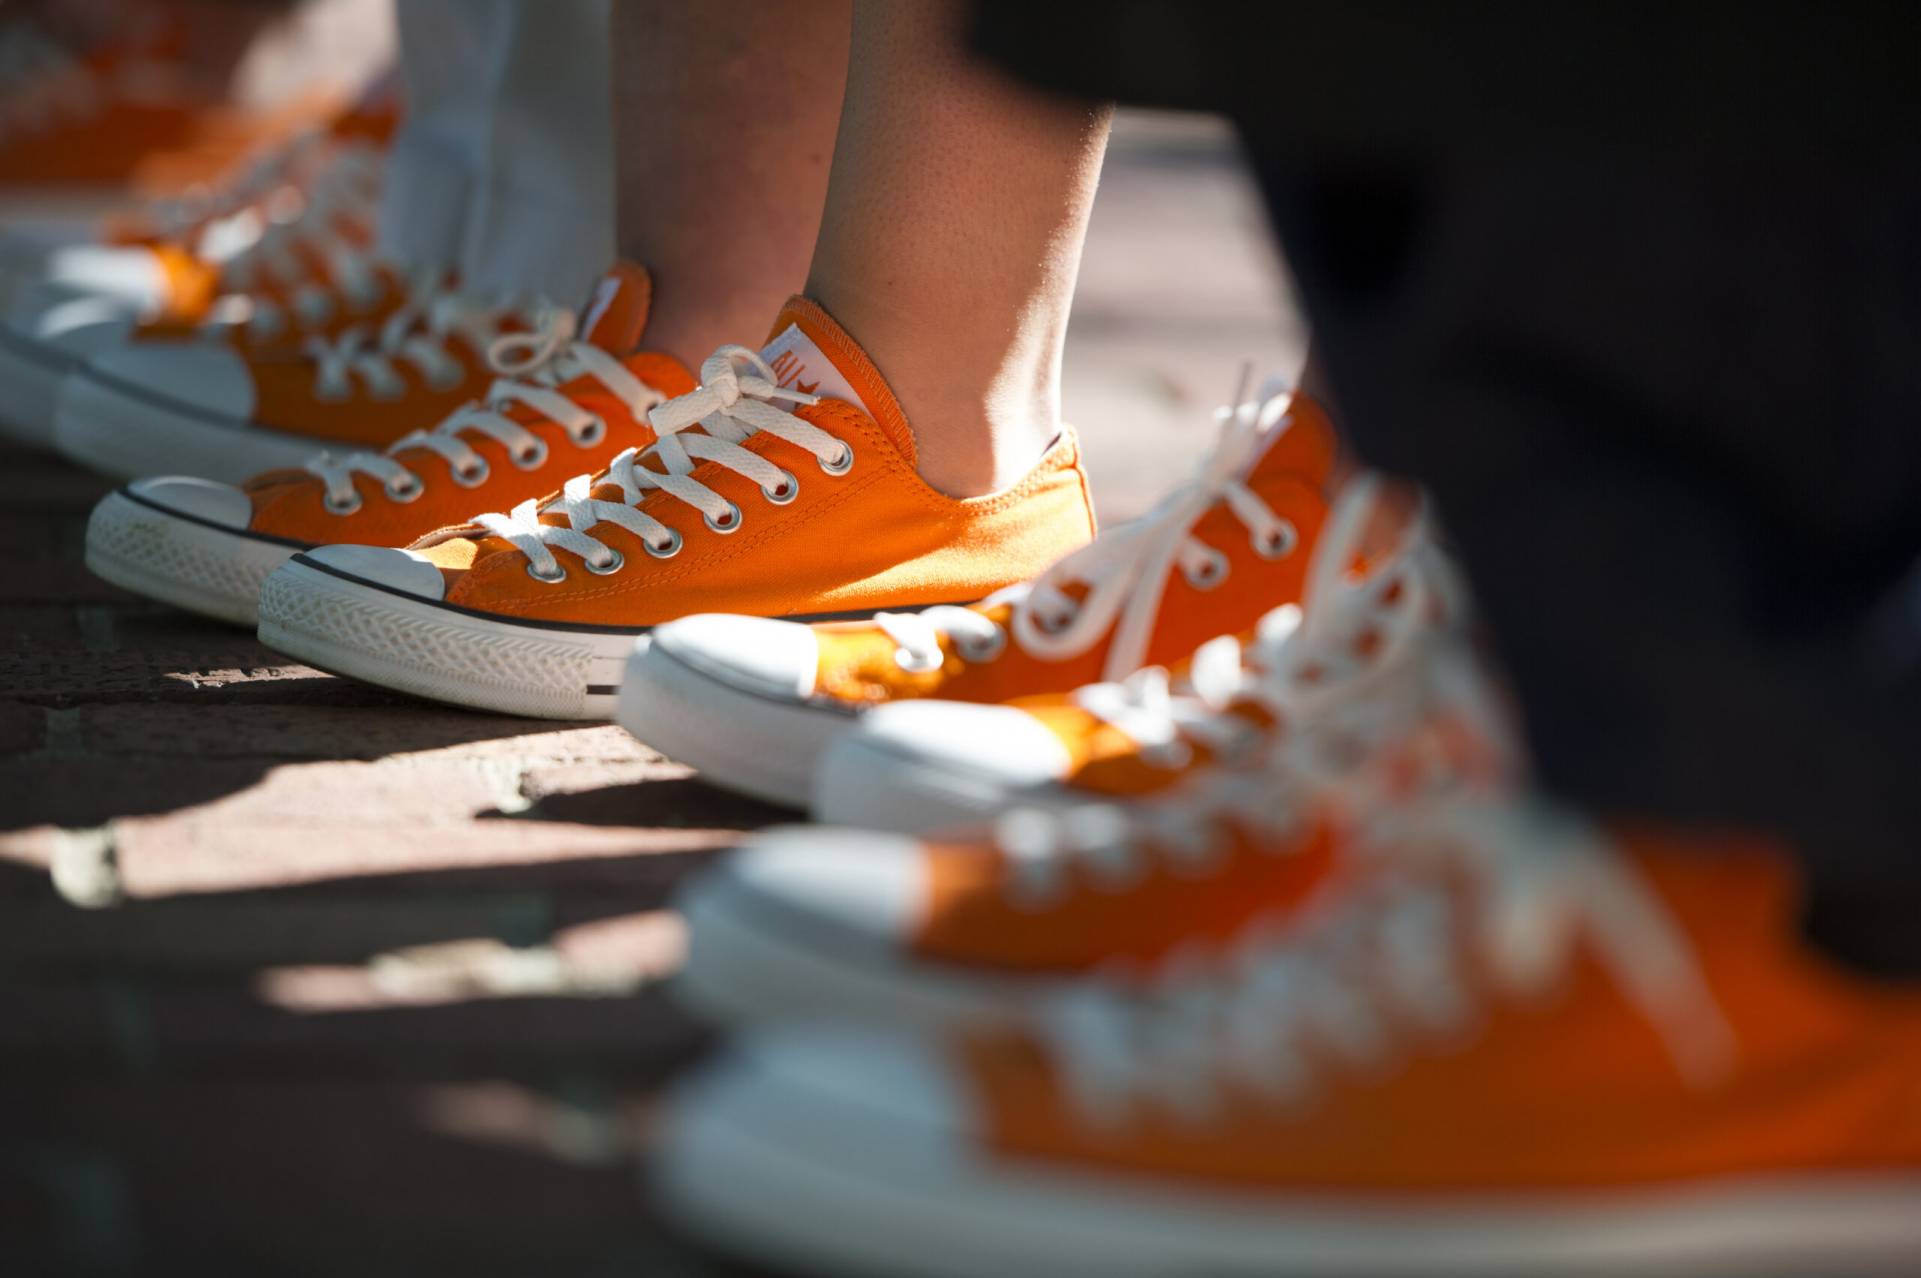 students feet in orange tennis shoes